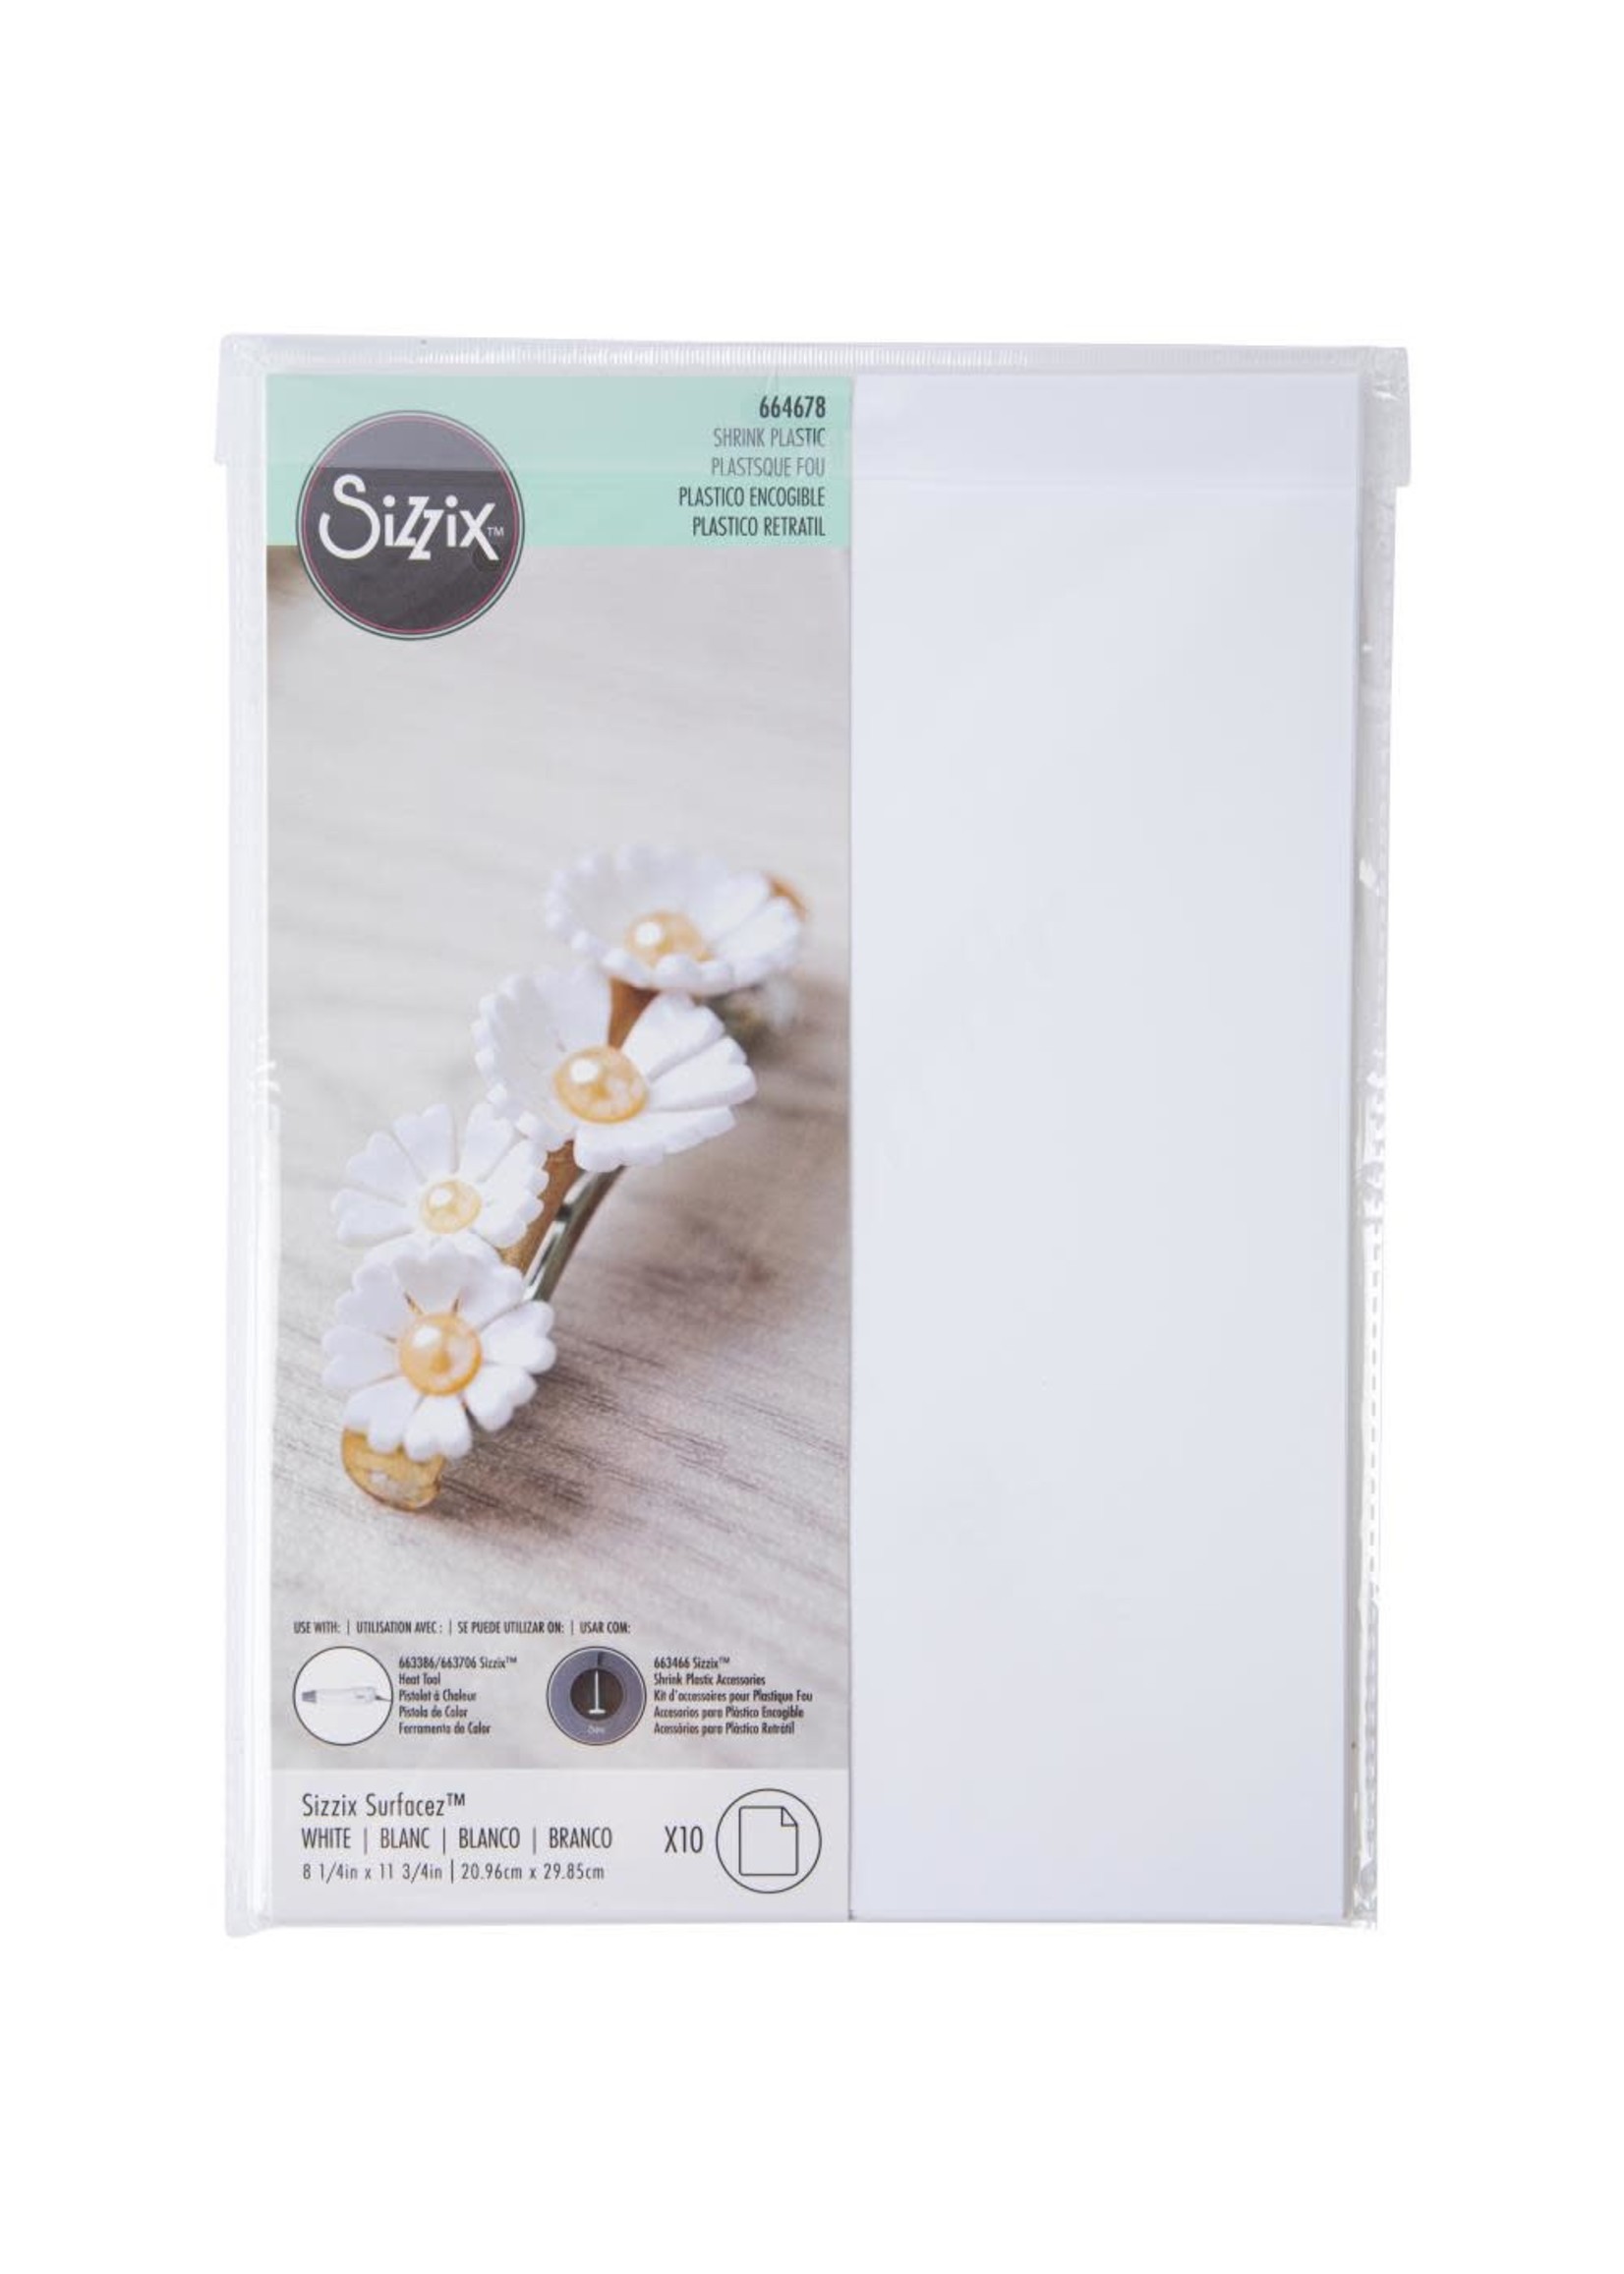 Sizzix Surfacez Shrink Plastic: White